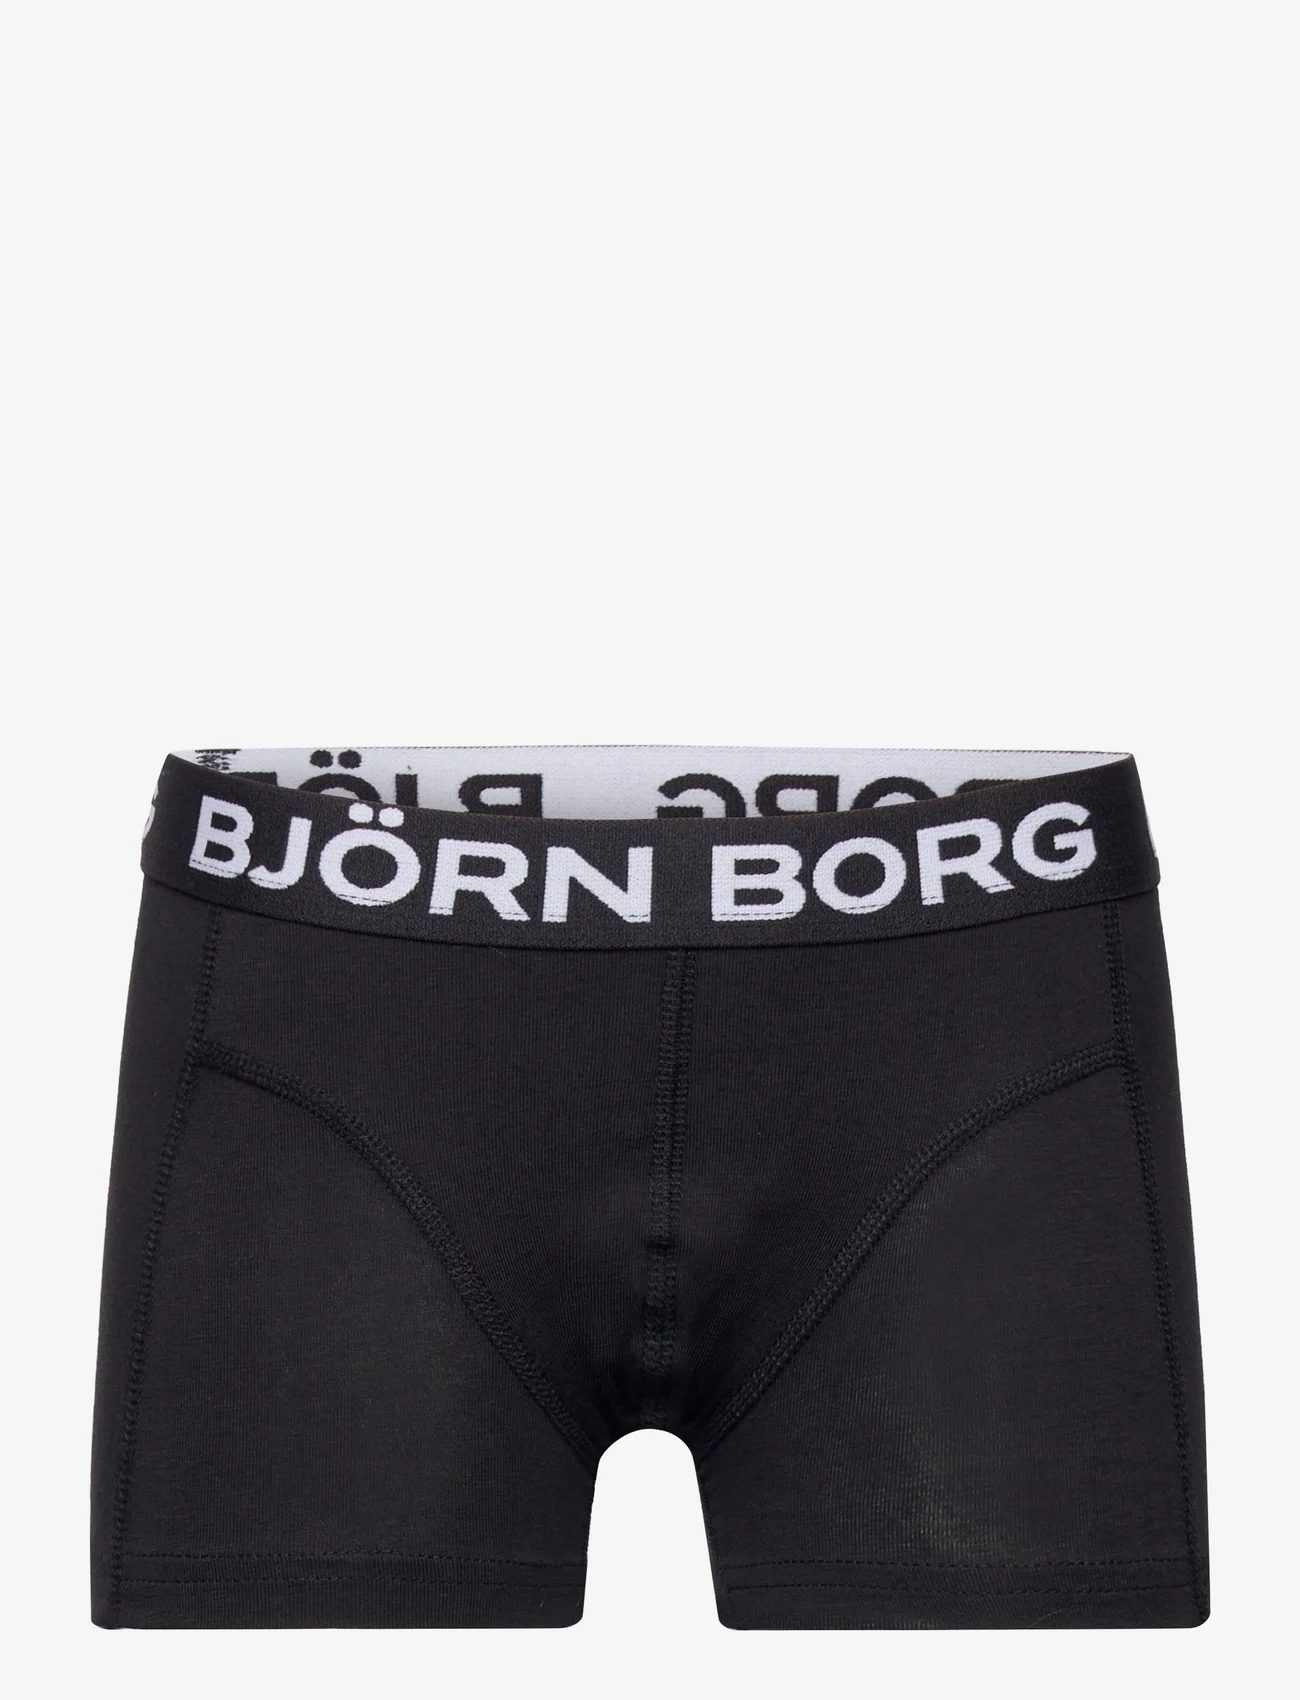 Björn Borg - CORE BOXER 5p - underpants - multipack 4 - 1